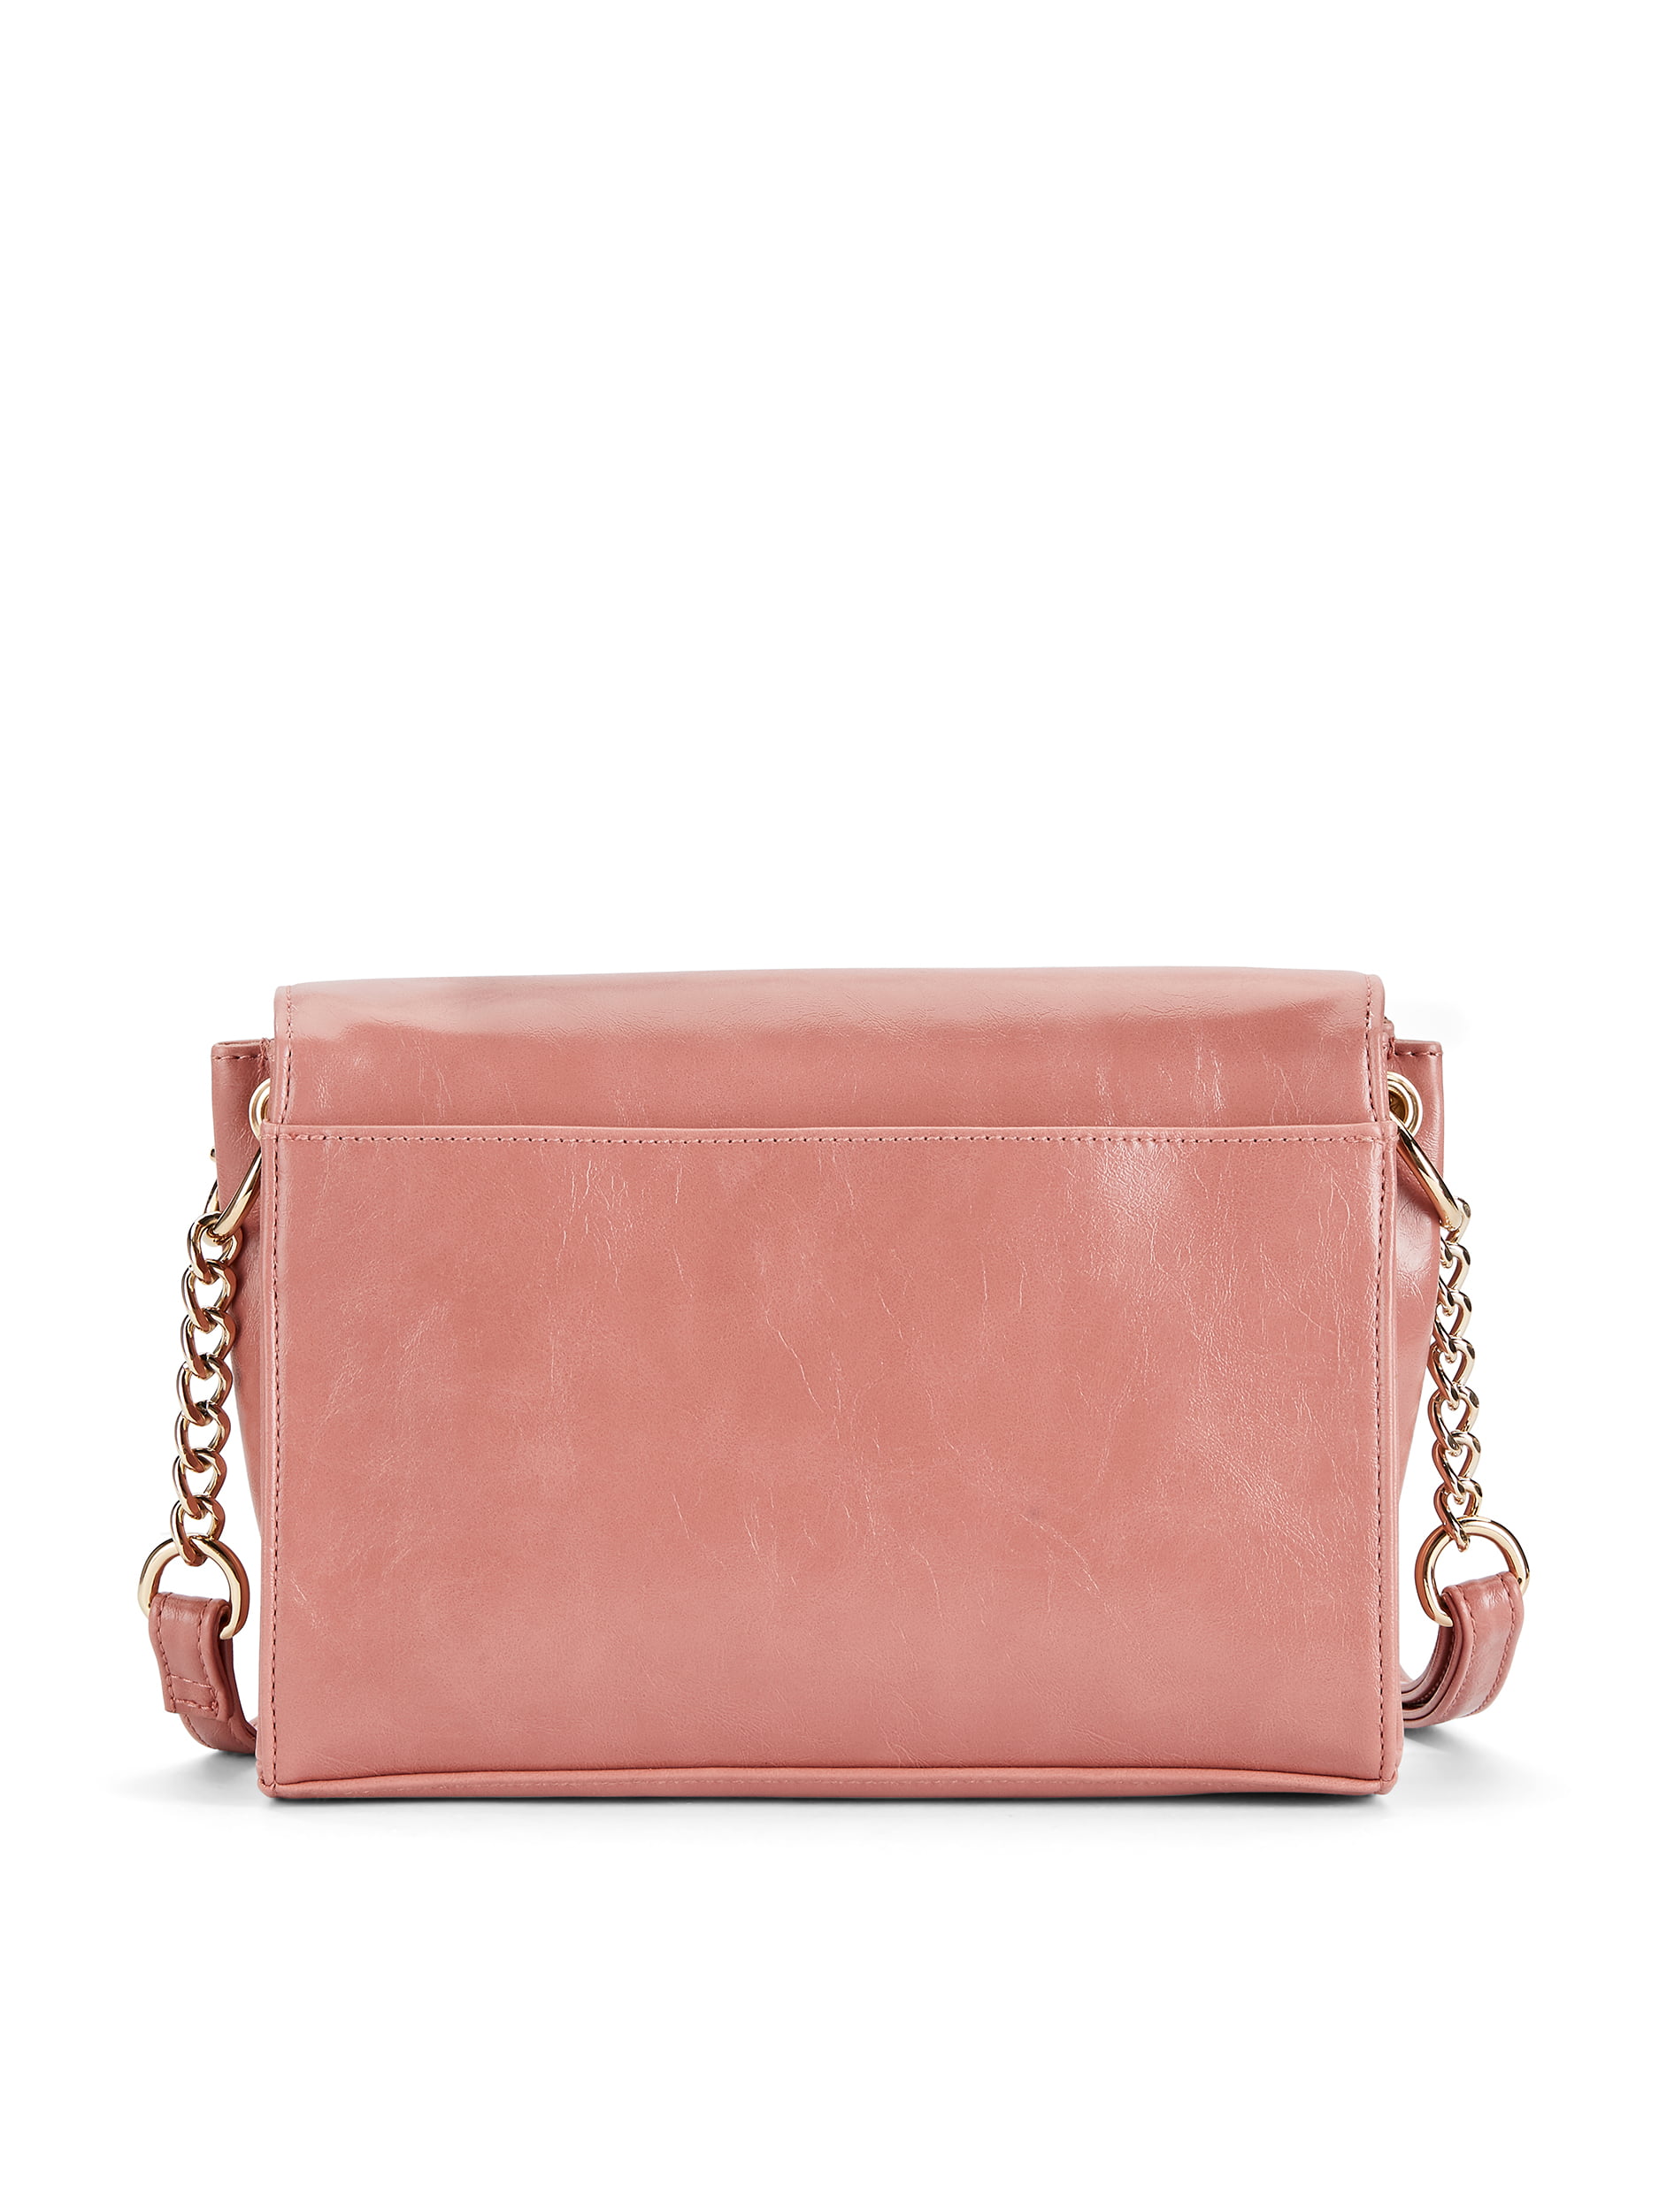 Rosetti purse | Shoulder bag, Purses, Rosetti